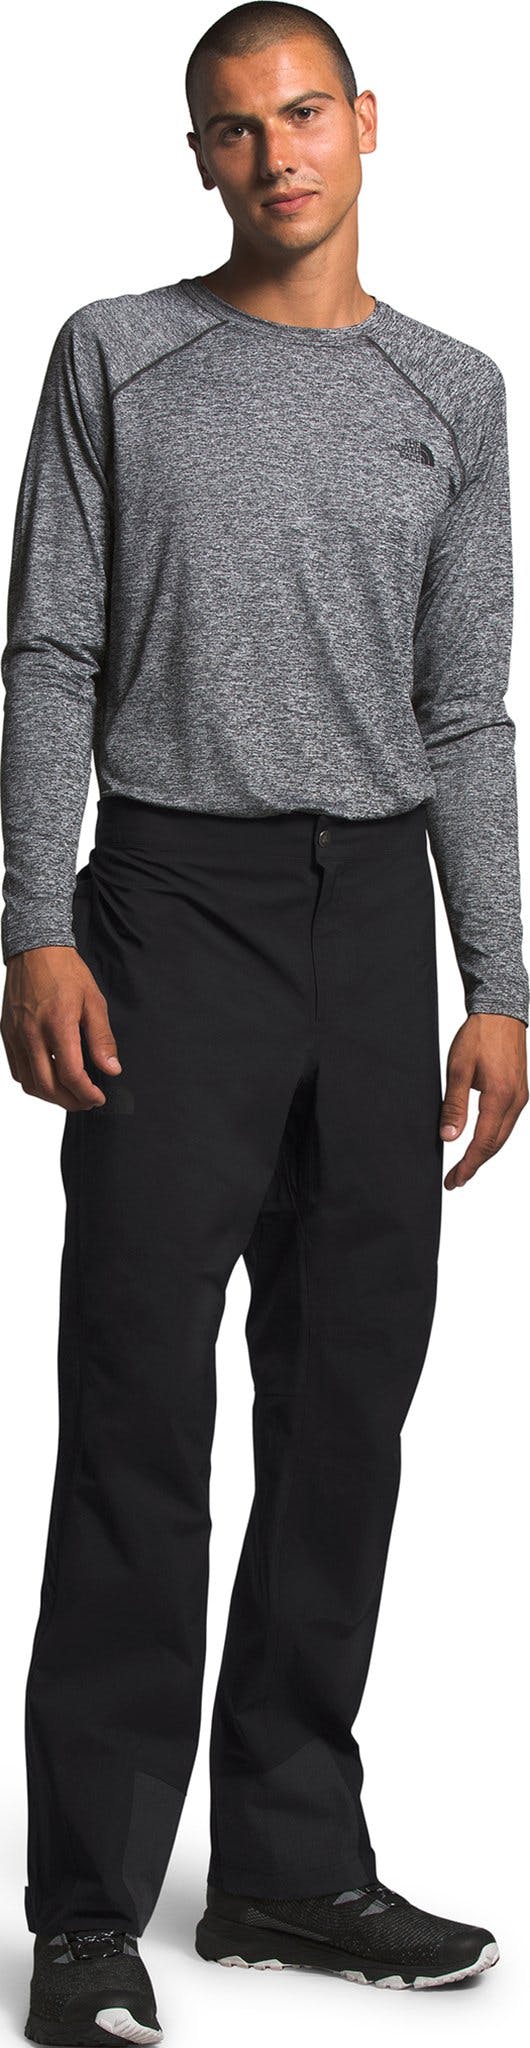 Product image for Dryzzle FUTURELIGHT Full Zip Pants - Men's